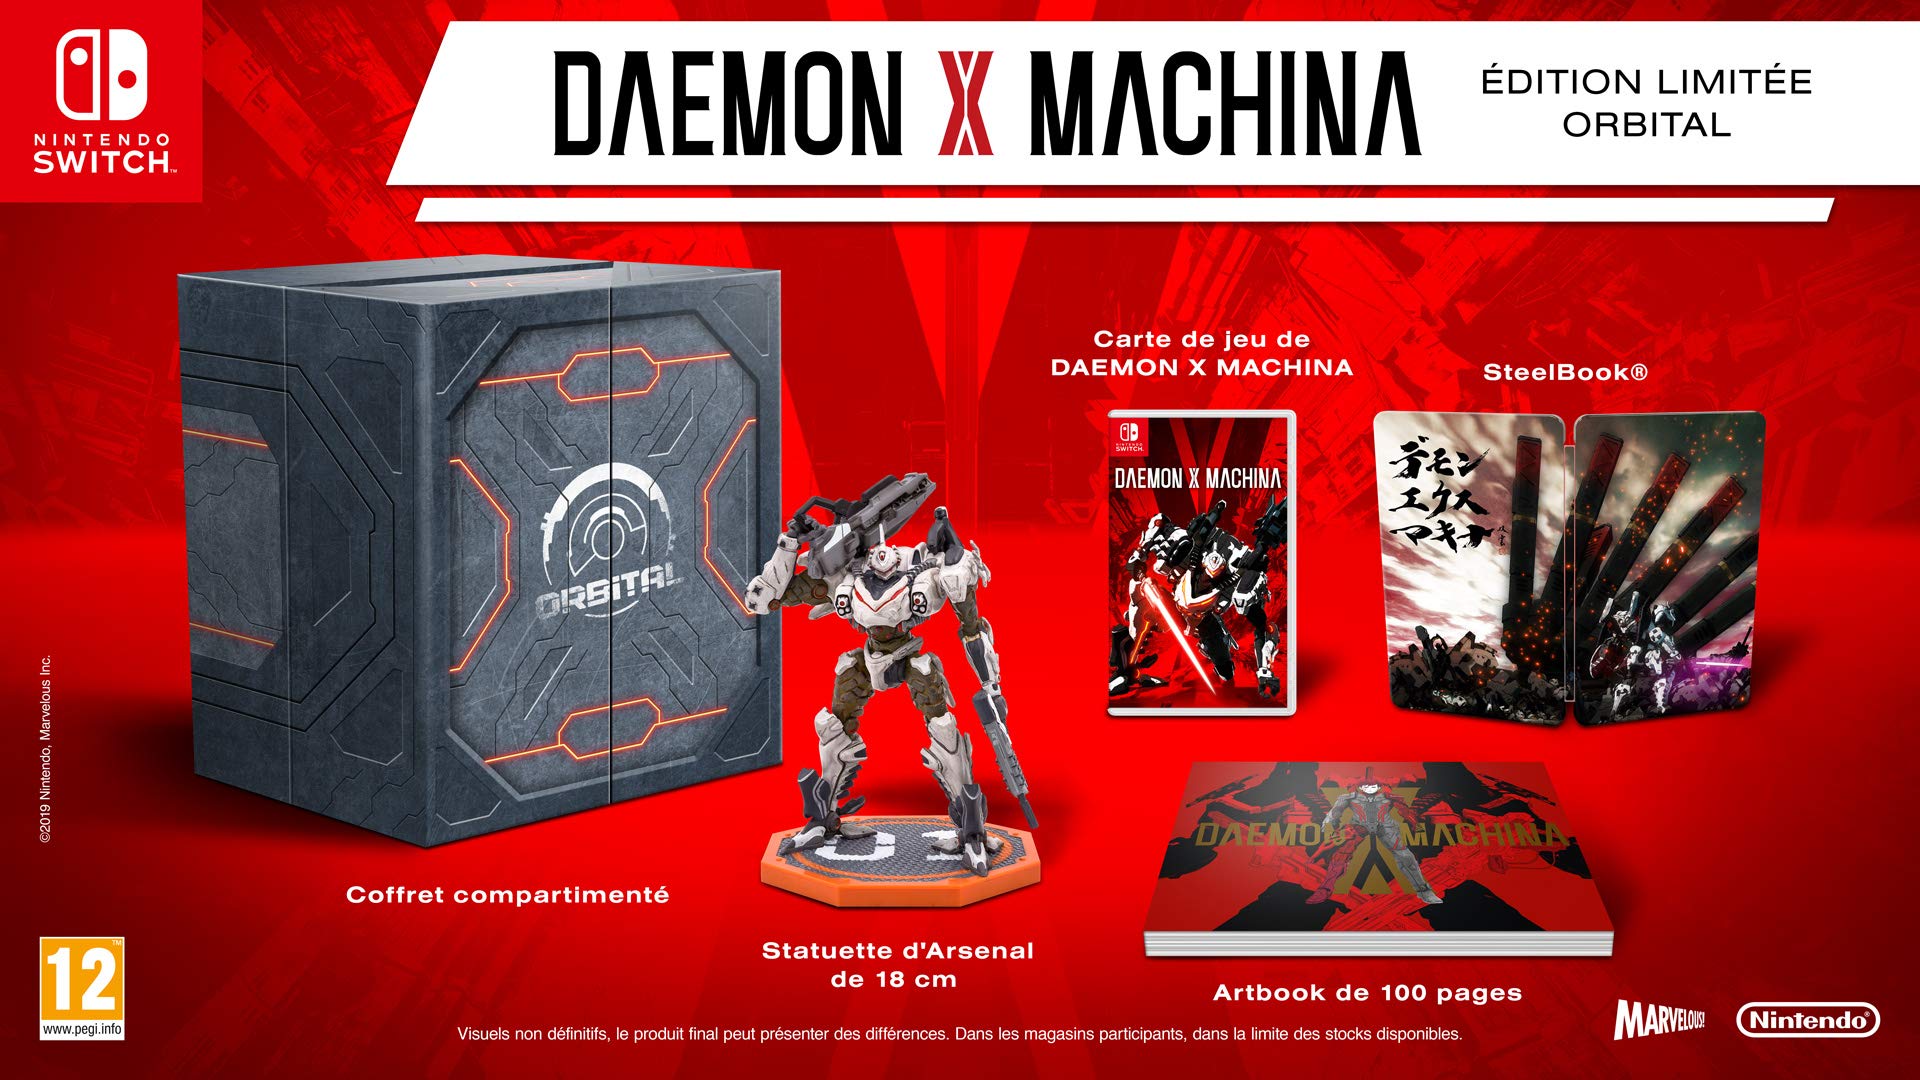 Daemon X Machina Orbital Limited Edition - (NSW) Nintendo Switch (European Import) Video Games Nintendo   